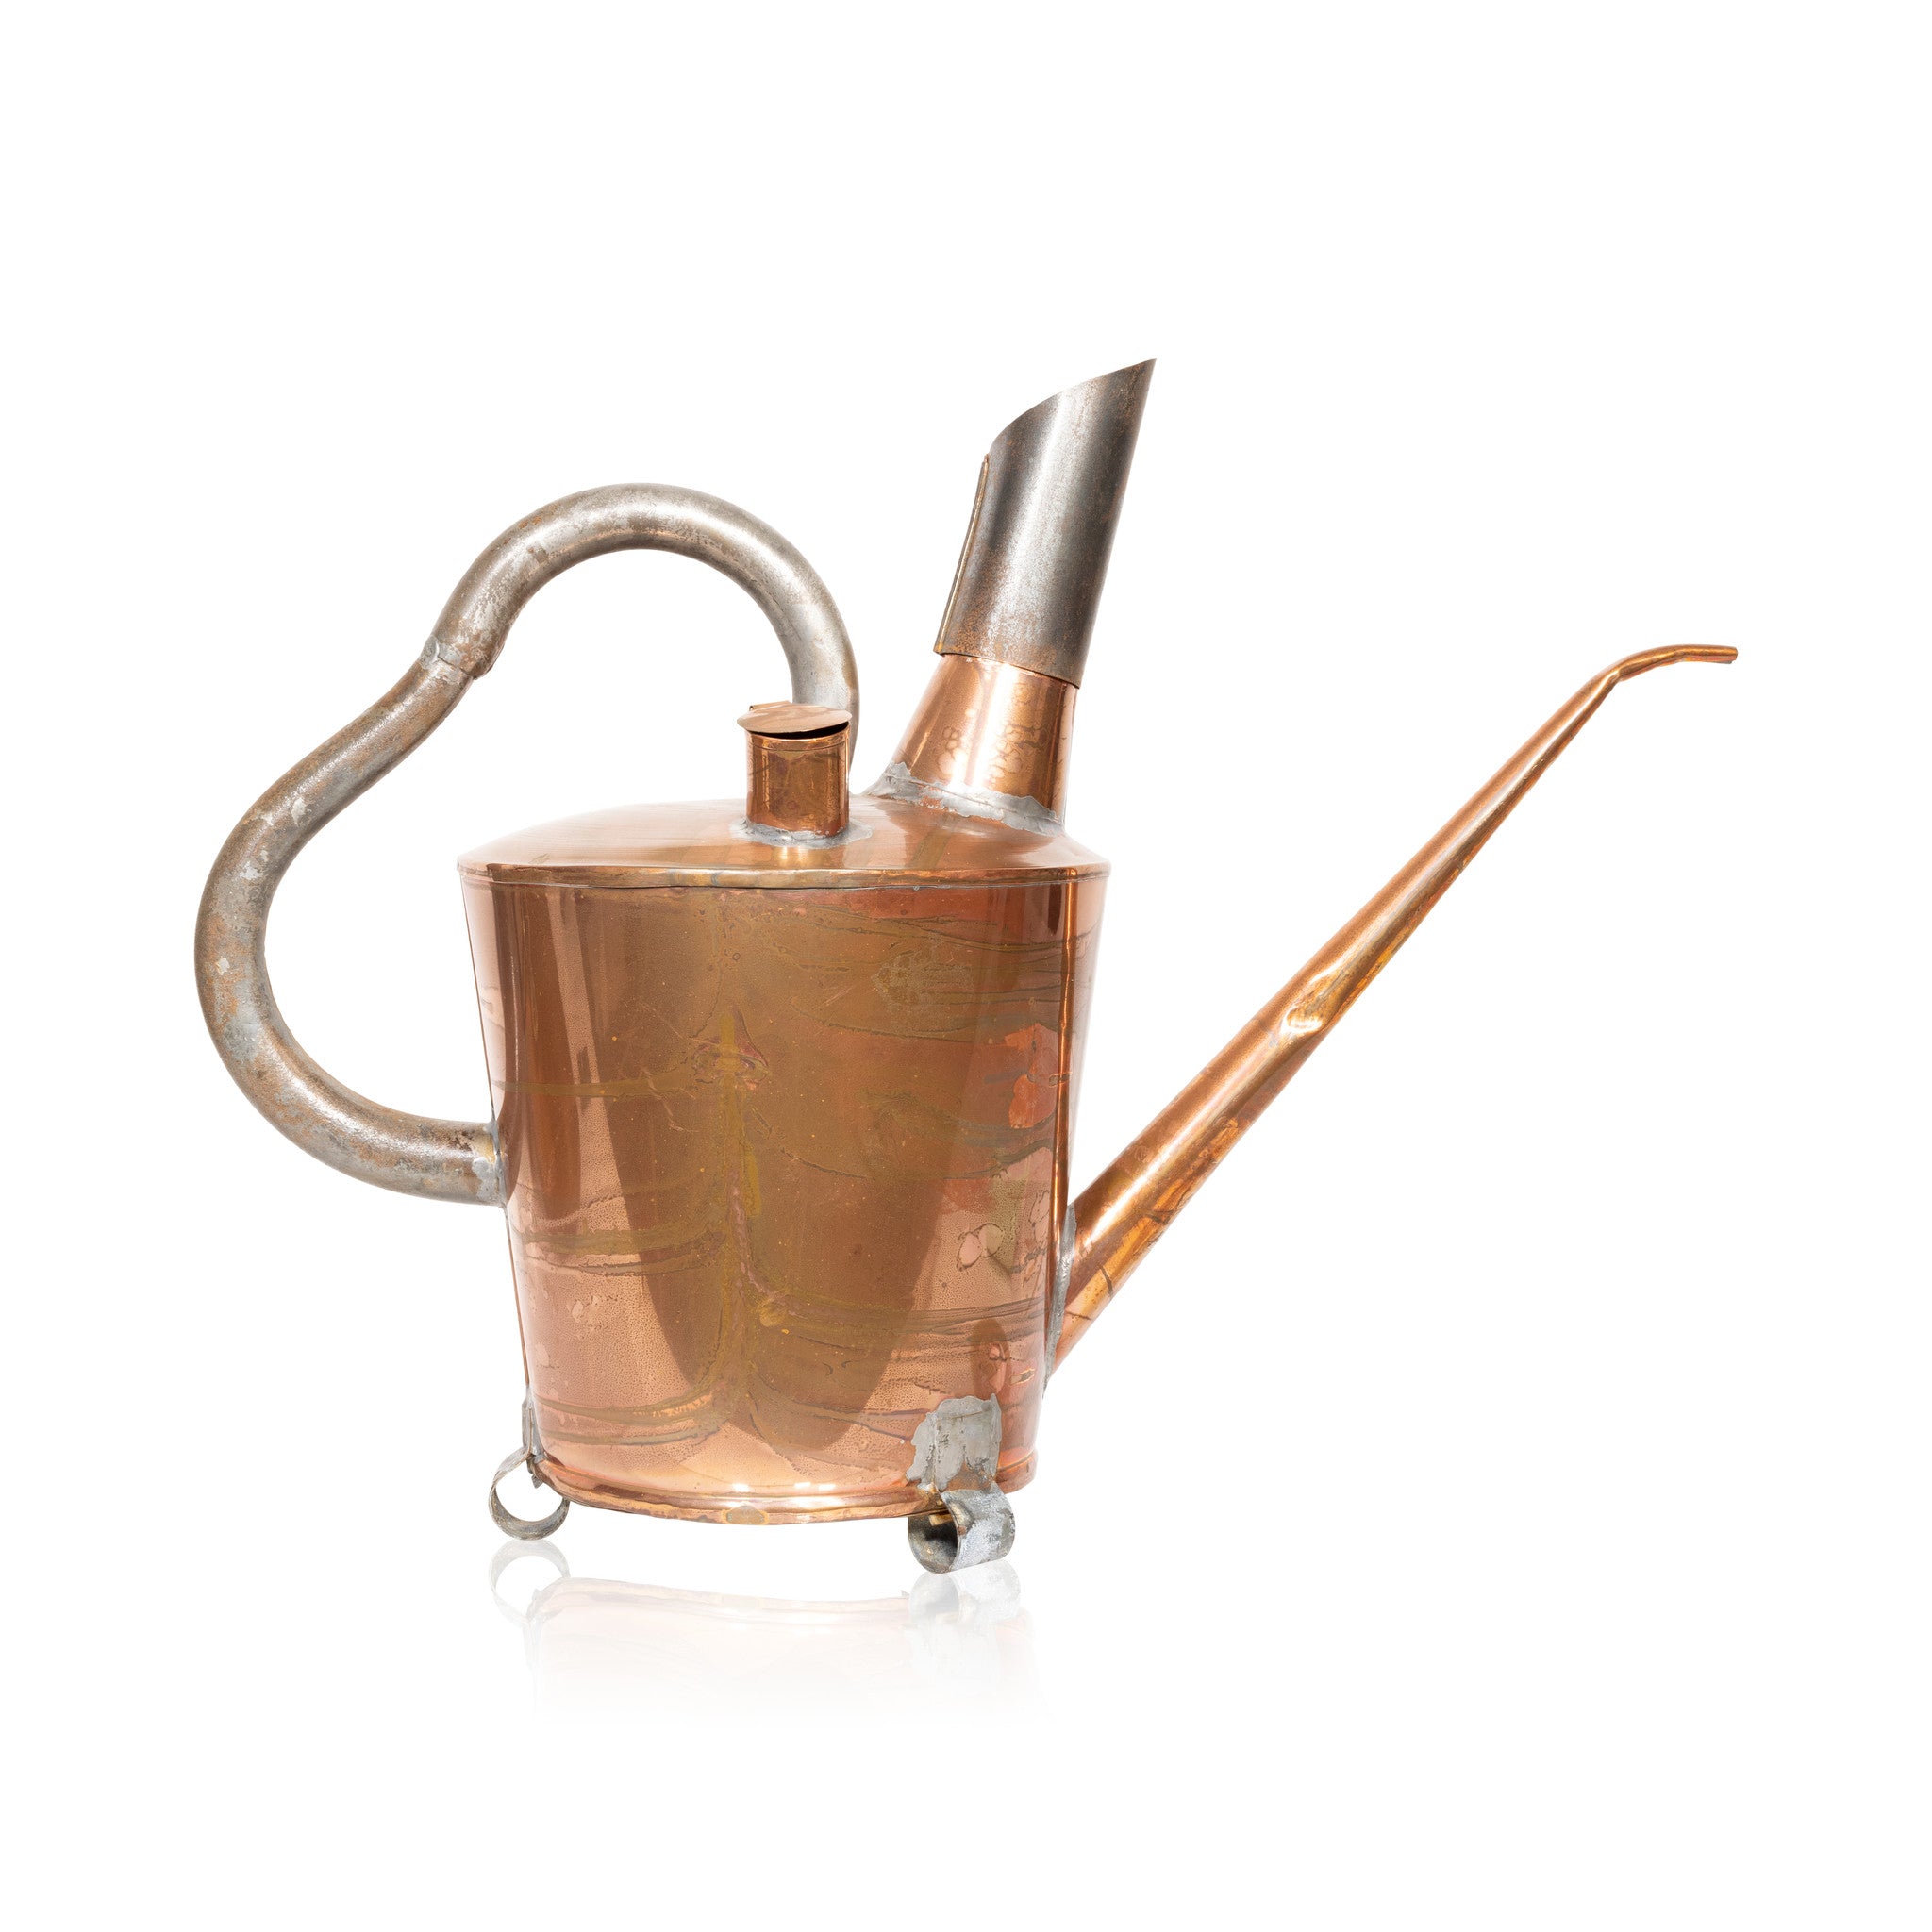 Copper Still, Furnishings, Barware, Liquor Related